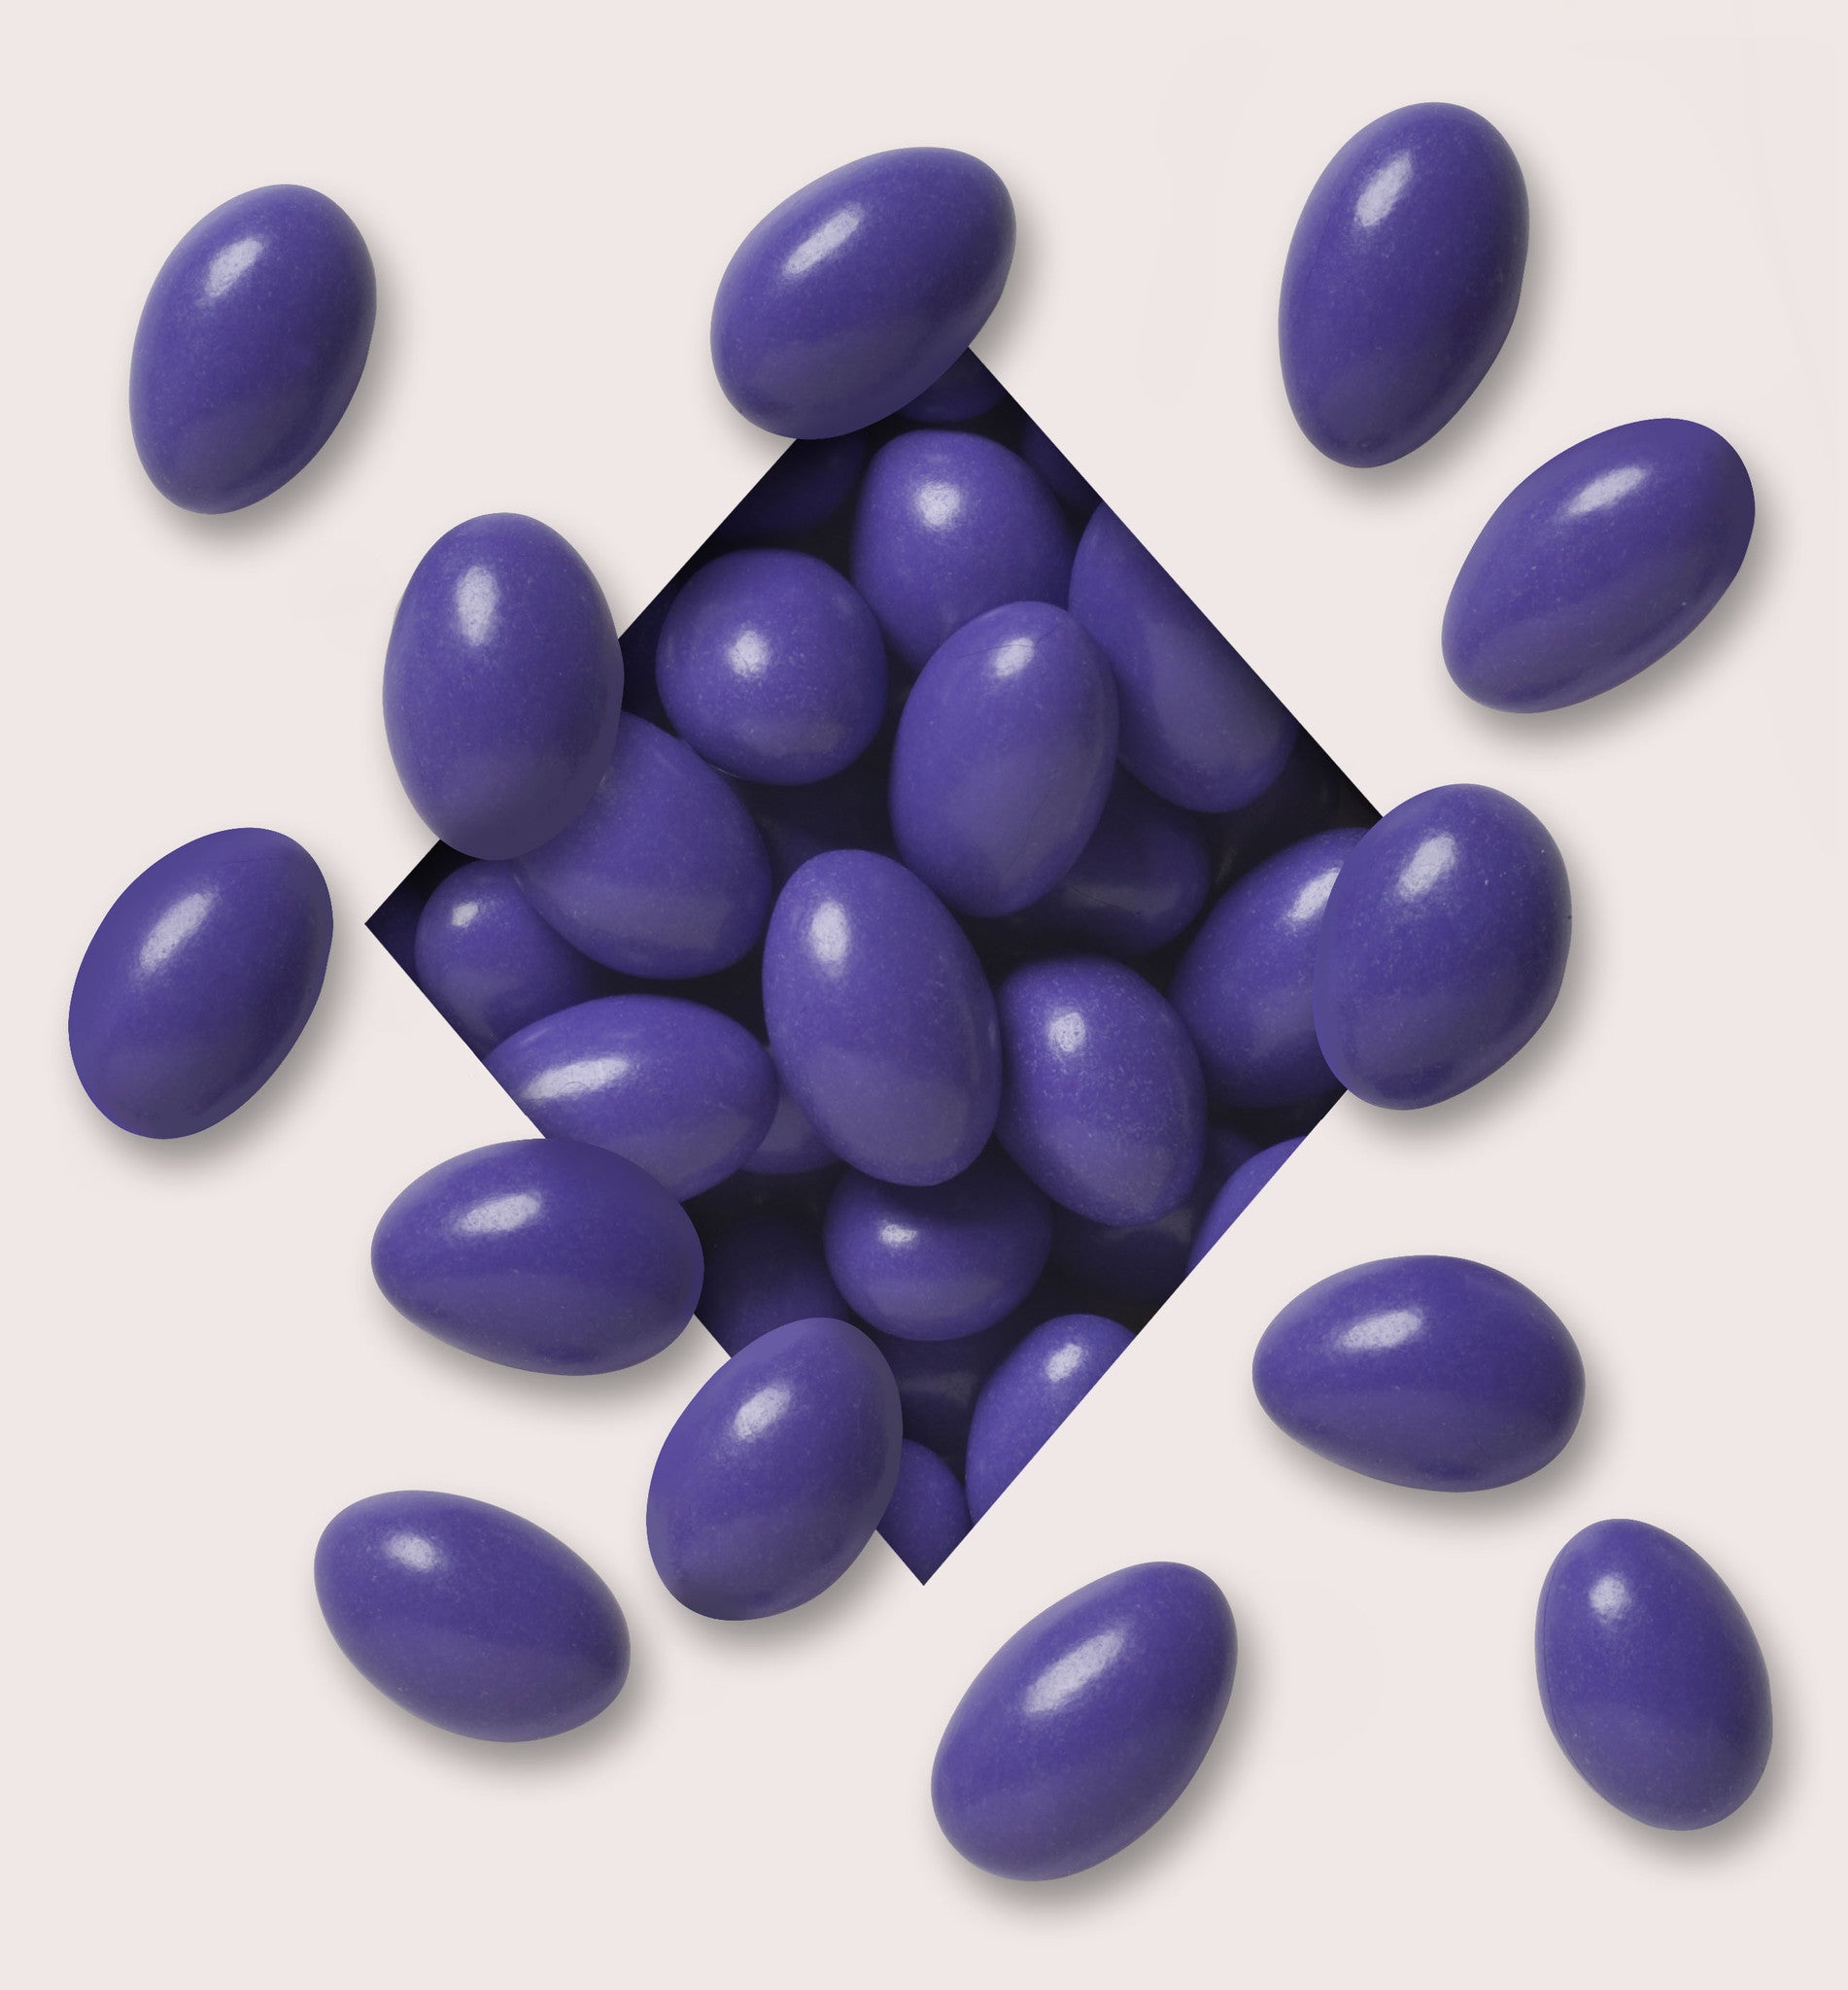 Purple Candy Coated Chocolate Almonds - *200 Lb. Minimum Order*